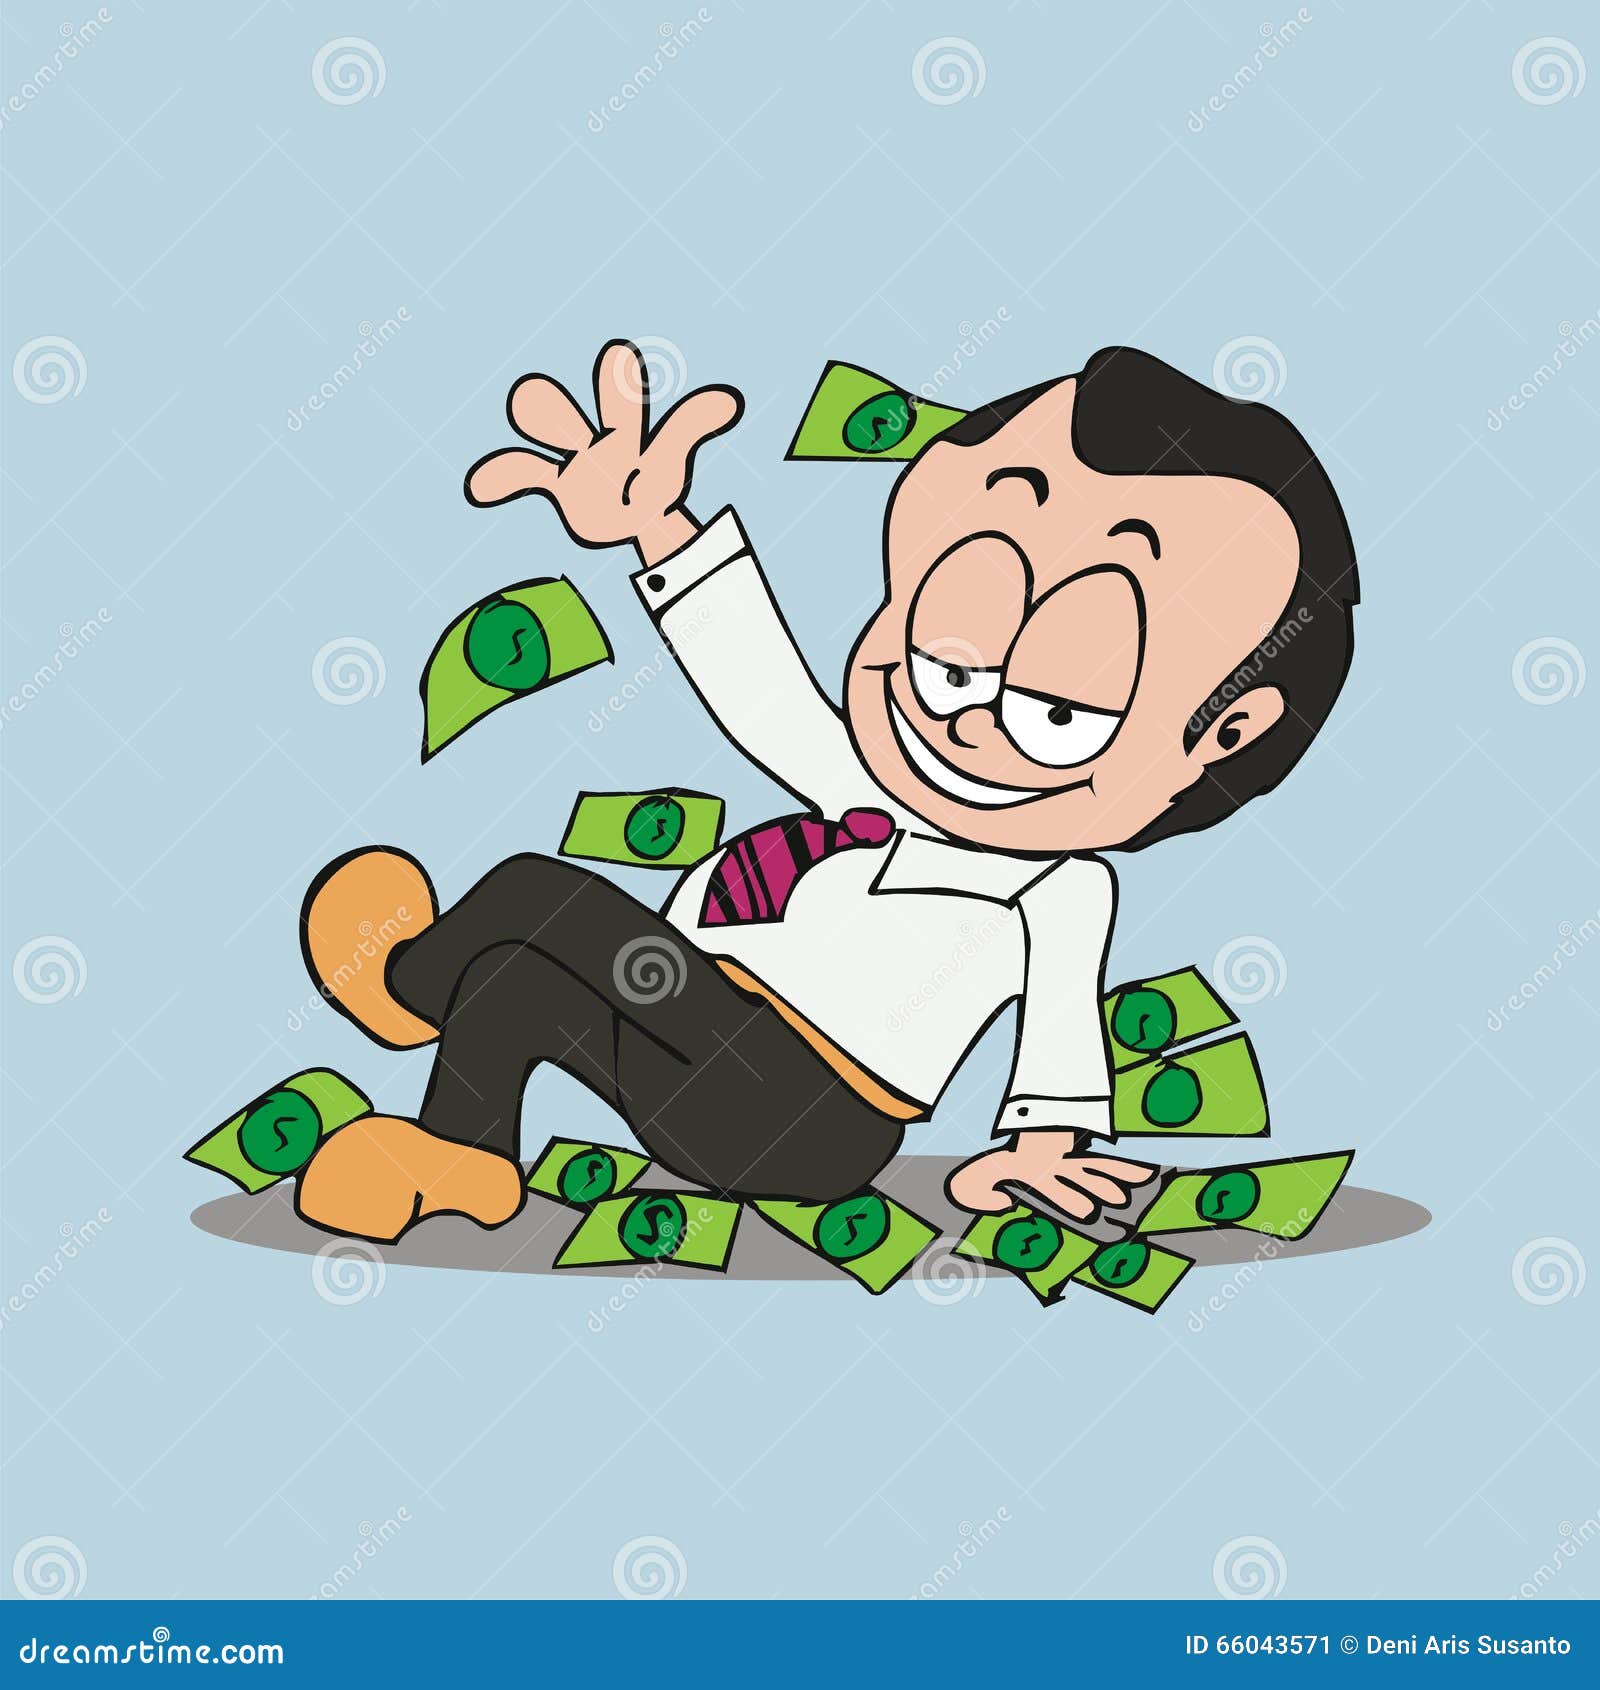 The Rich Man Cartoon Vector Stock Vector - Illustration of achievement,  growth: 66043571